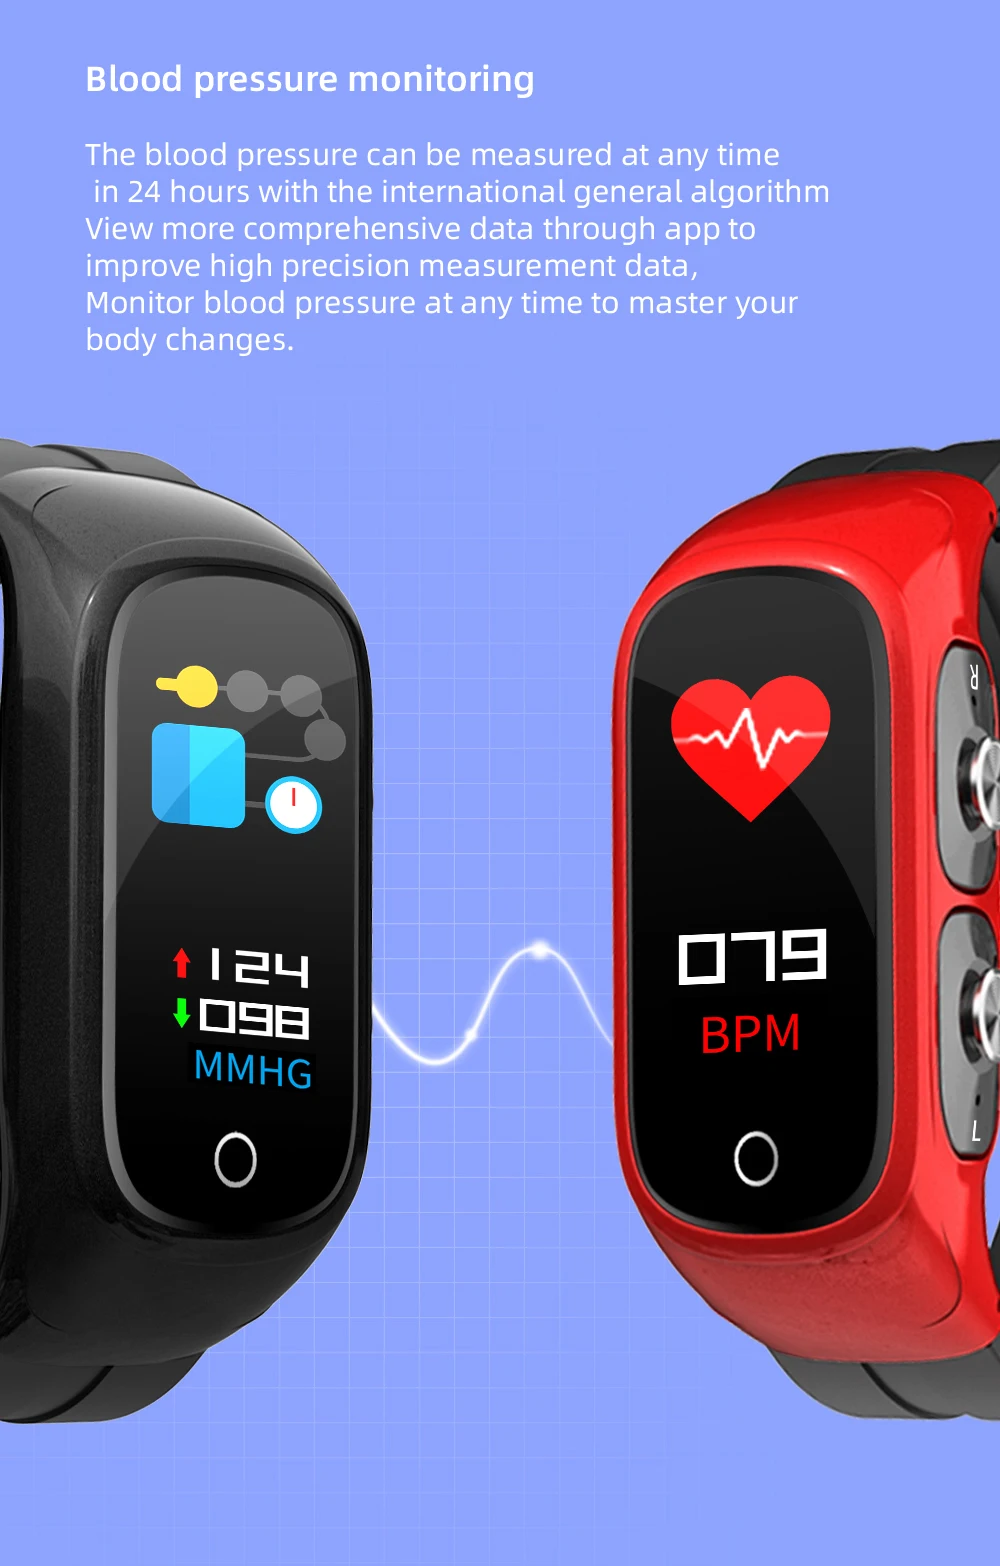 N8 Smart Bracelet TWS Wireless Earphone BT Call Heart Rate Blood Pressure Monitor Sport Smart Wristbracelet Android IOS